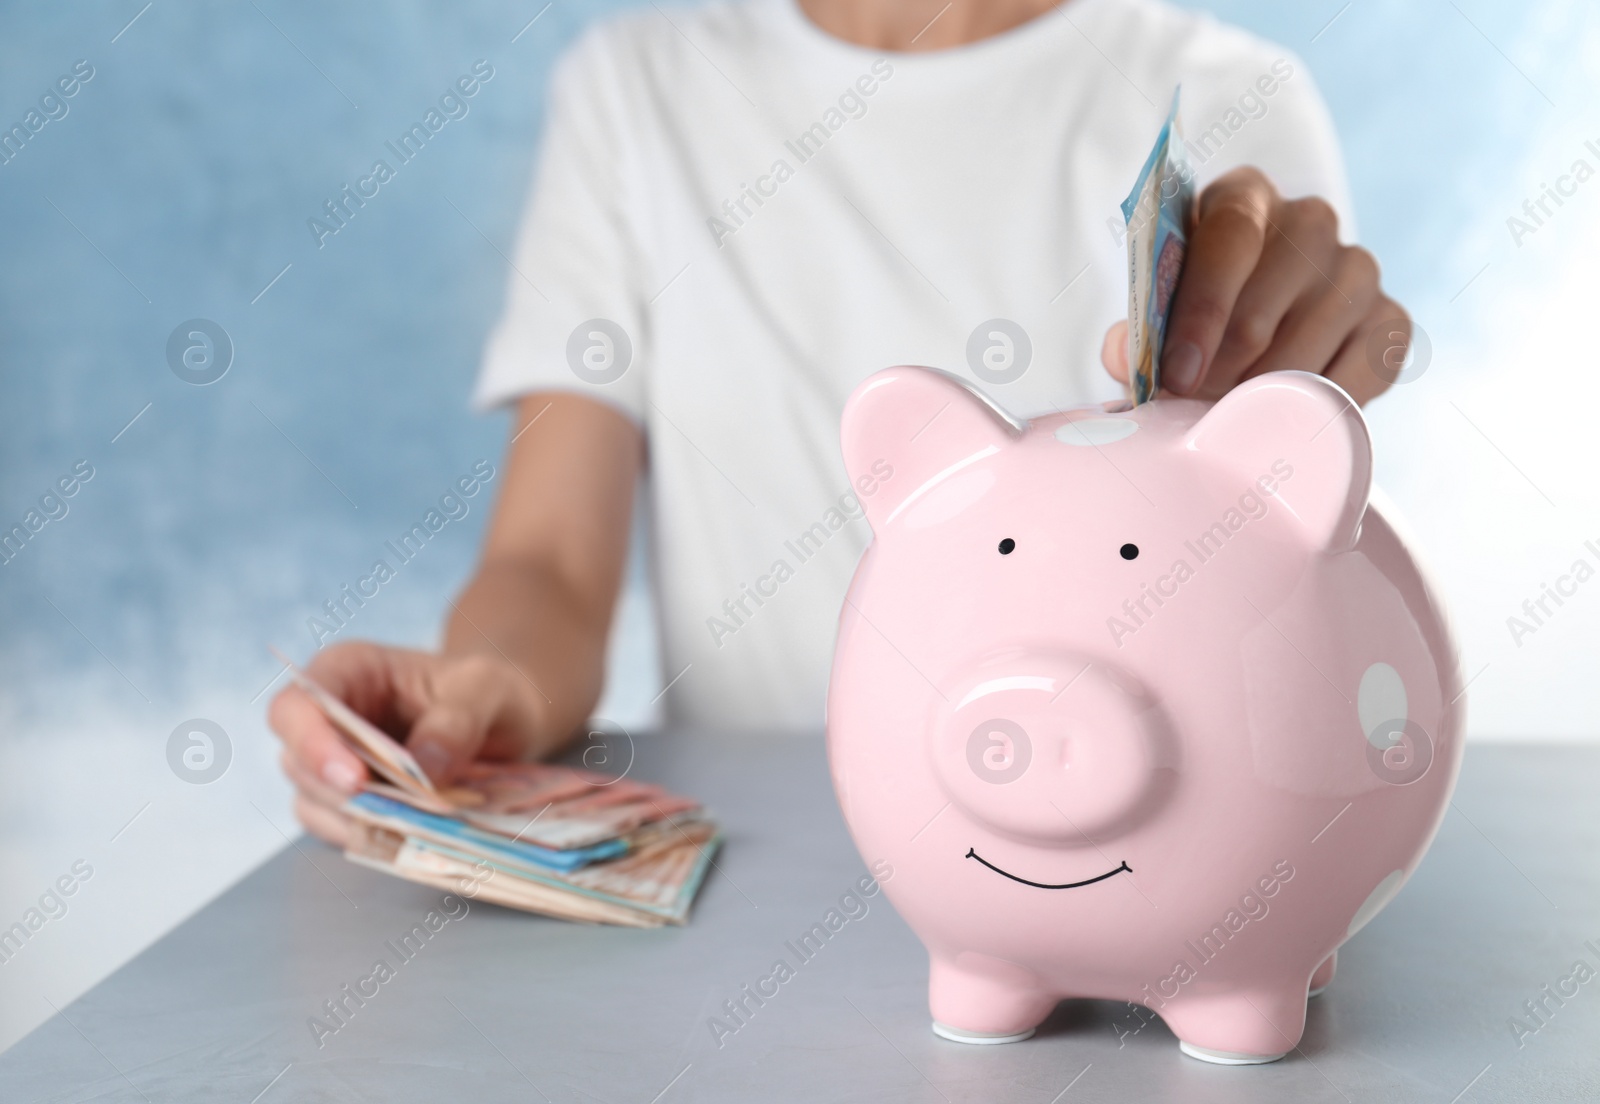 Photo of Woman putting Euro banknote into piggy bank at table indoors, closeup. Money savings